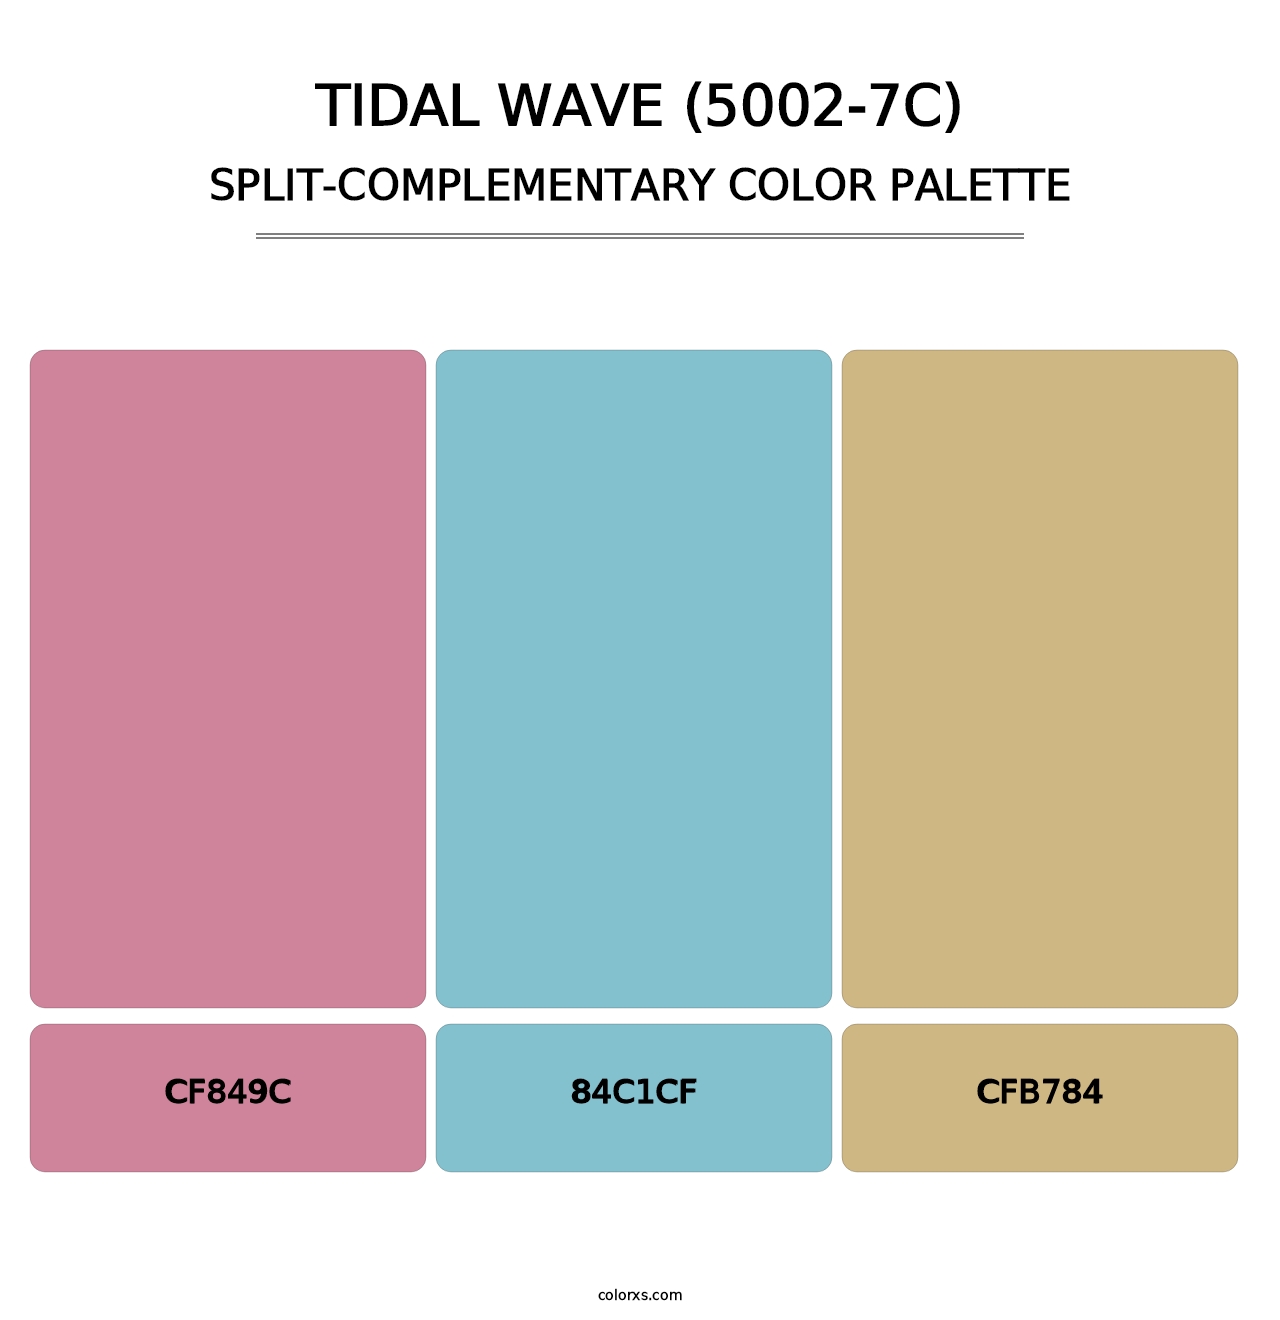 Tidal Wave (5002-7C) - Split-Complementary Color Palette